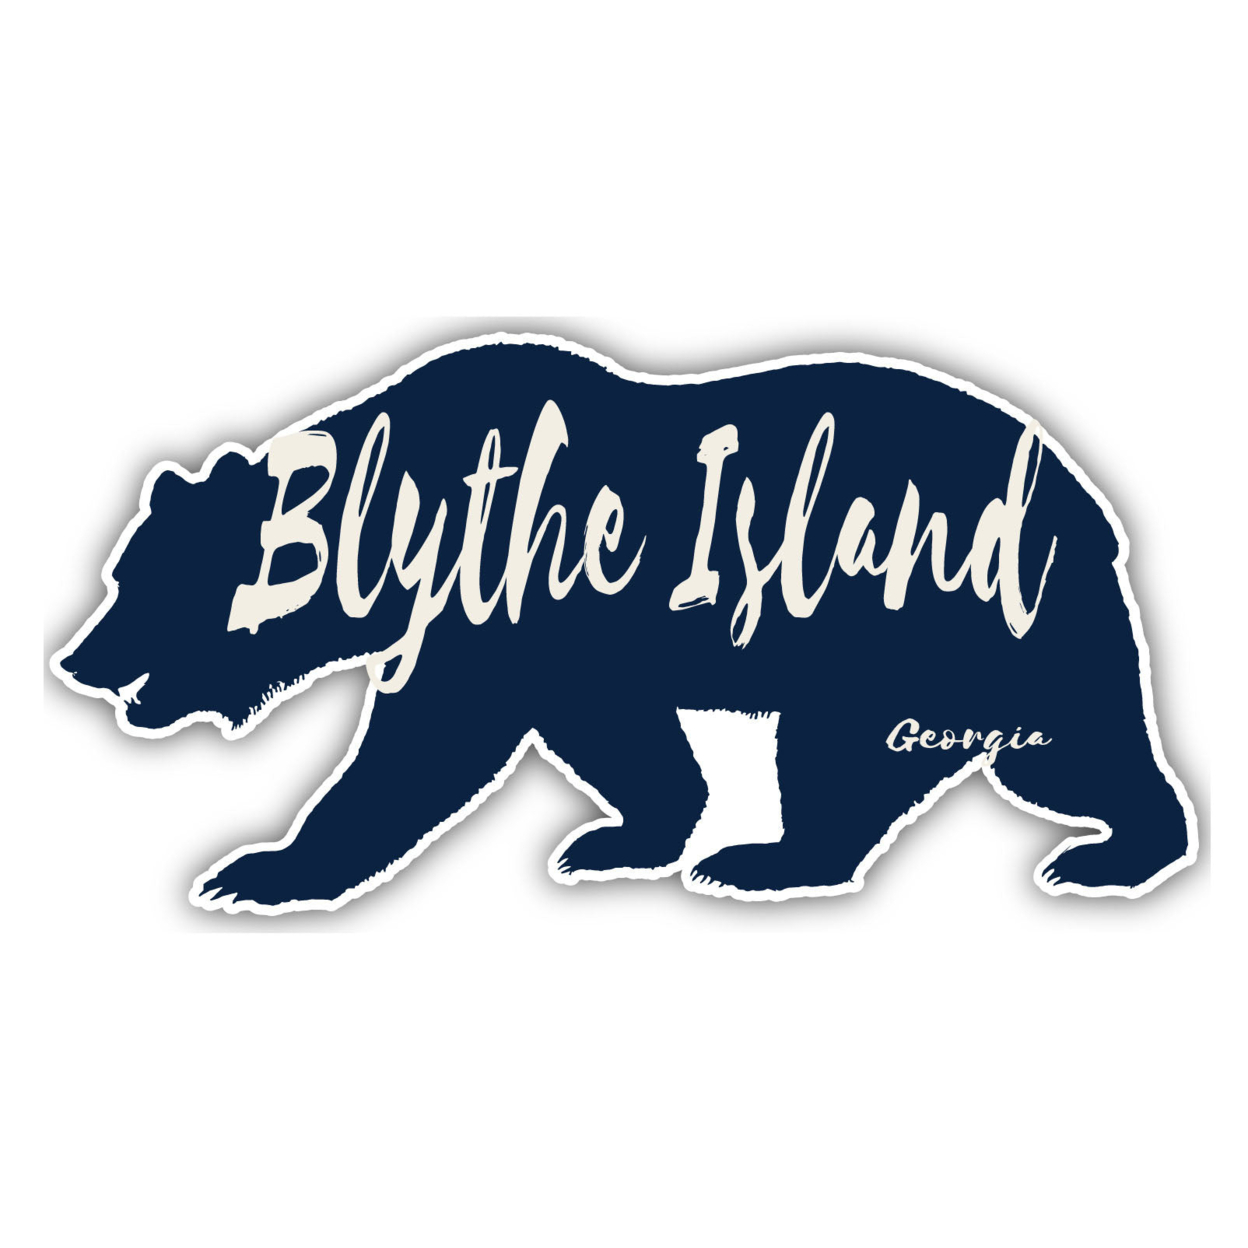 Blythe Island Georgia Souvenir Decorative Stickers (Choose Theme And Size) - Single Unit, 6-Inch, Camp Life